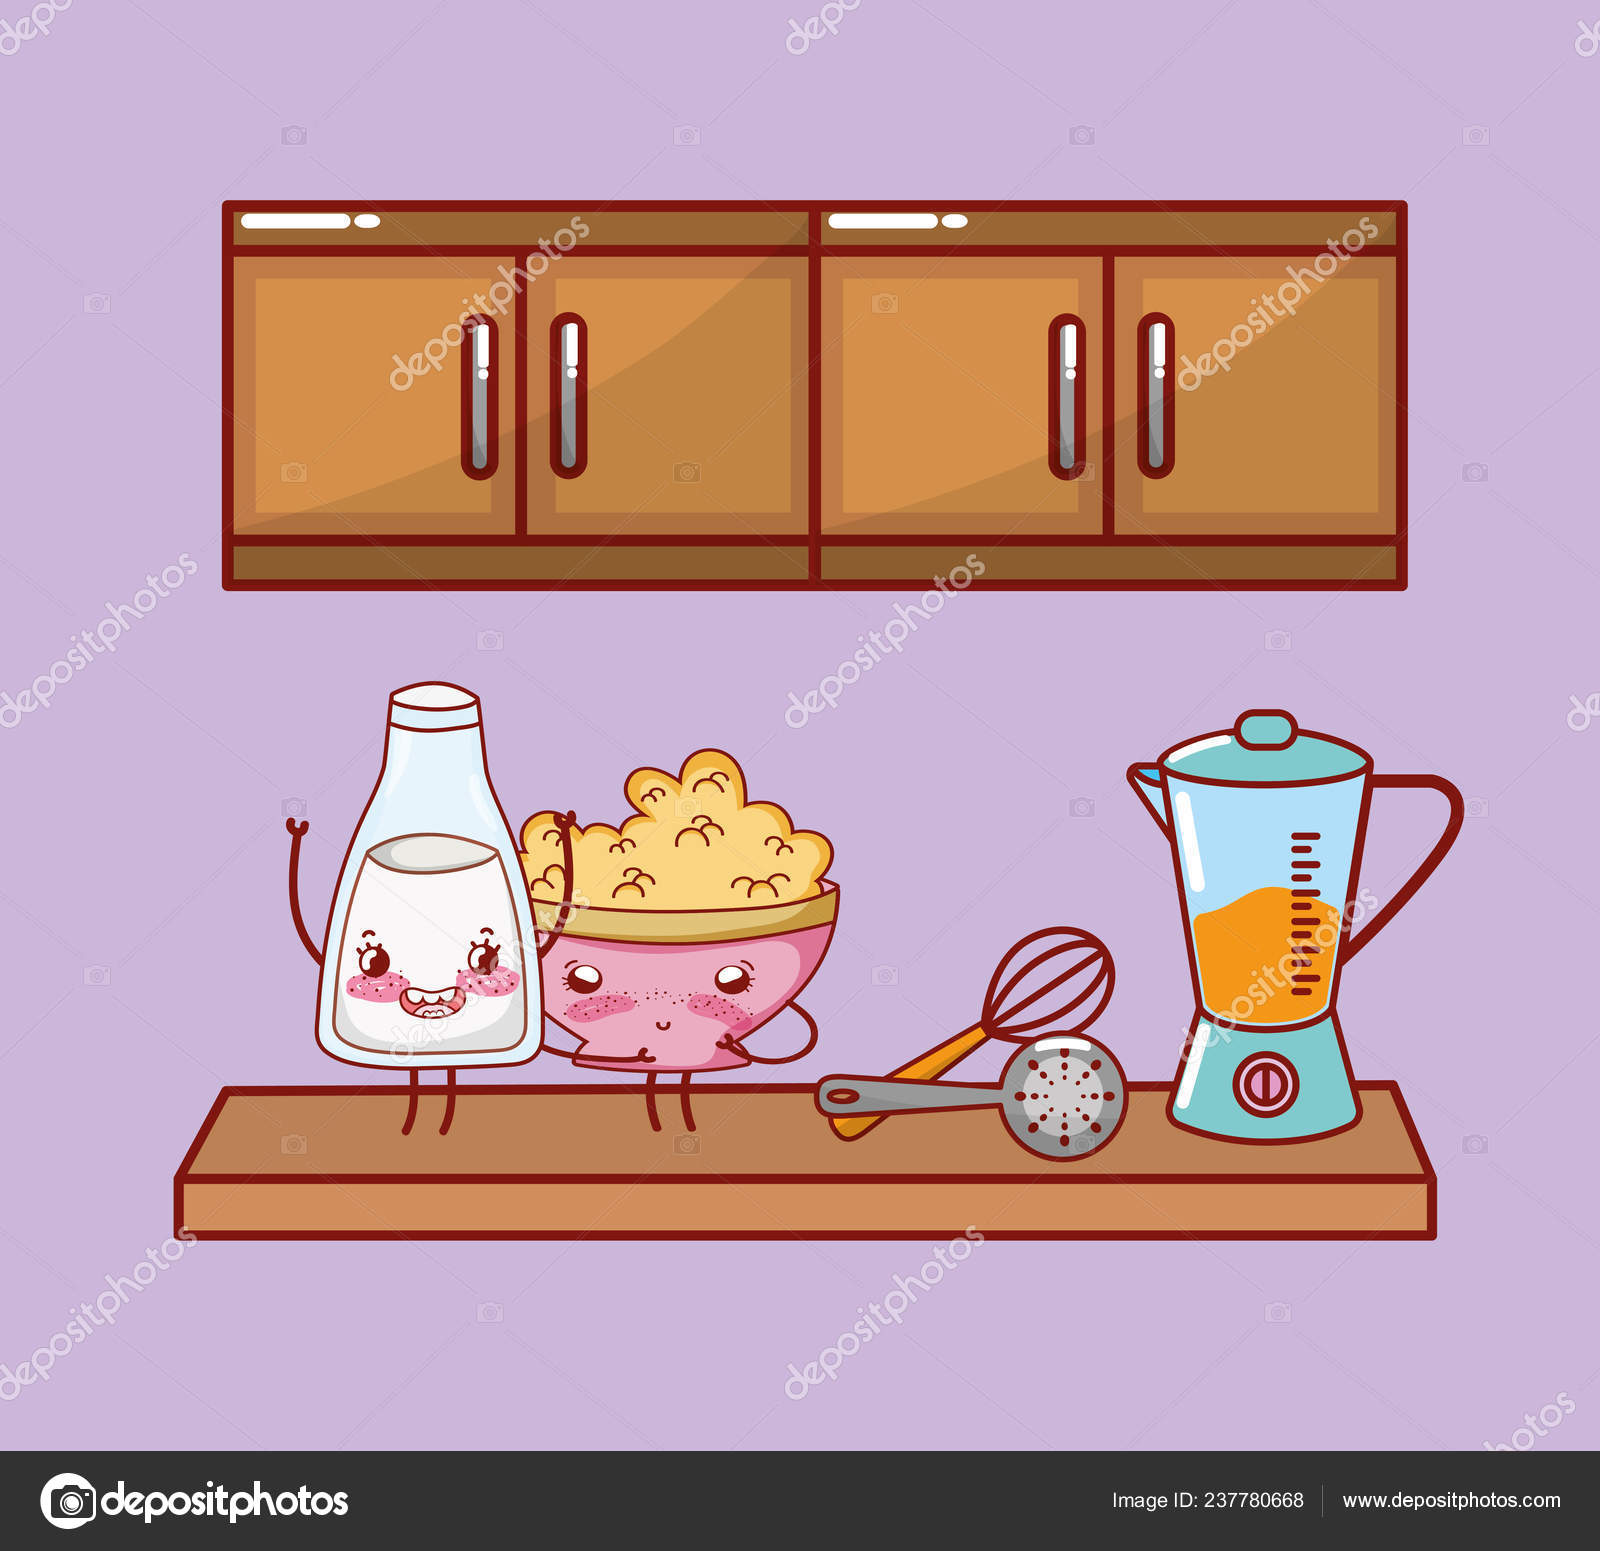 https://st4.depositphotos.com/11953928/23778/v/1600/depositphotos_237780668-stock-illustration-kitchen-shelf-kitchenware-ingredients-icons.jpg